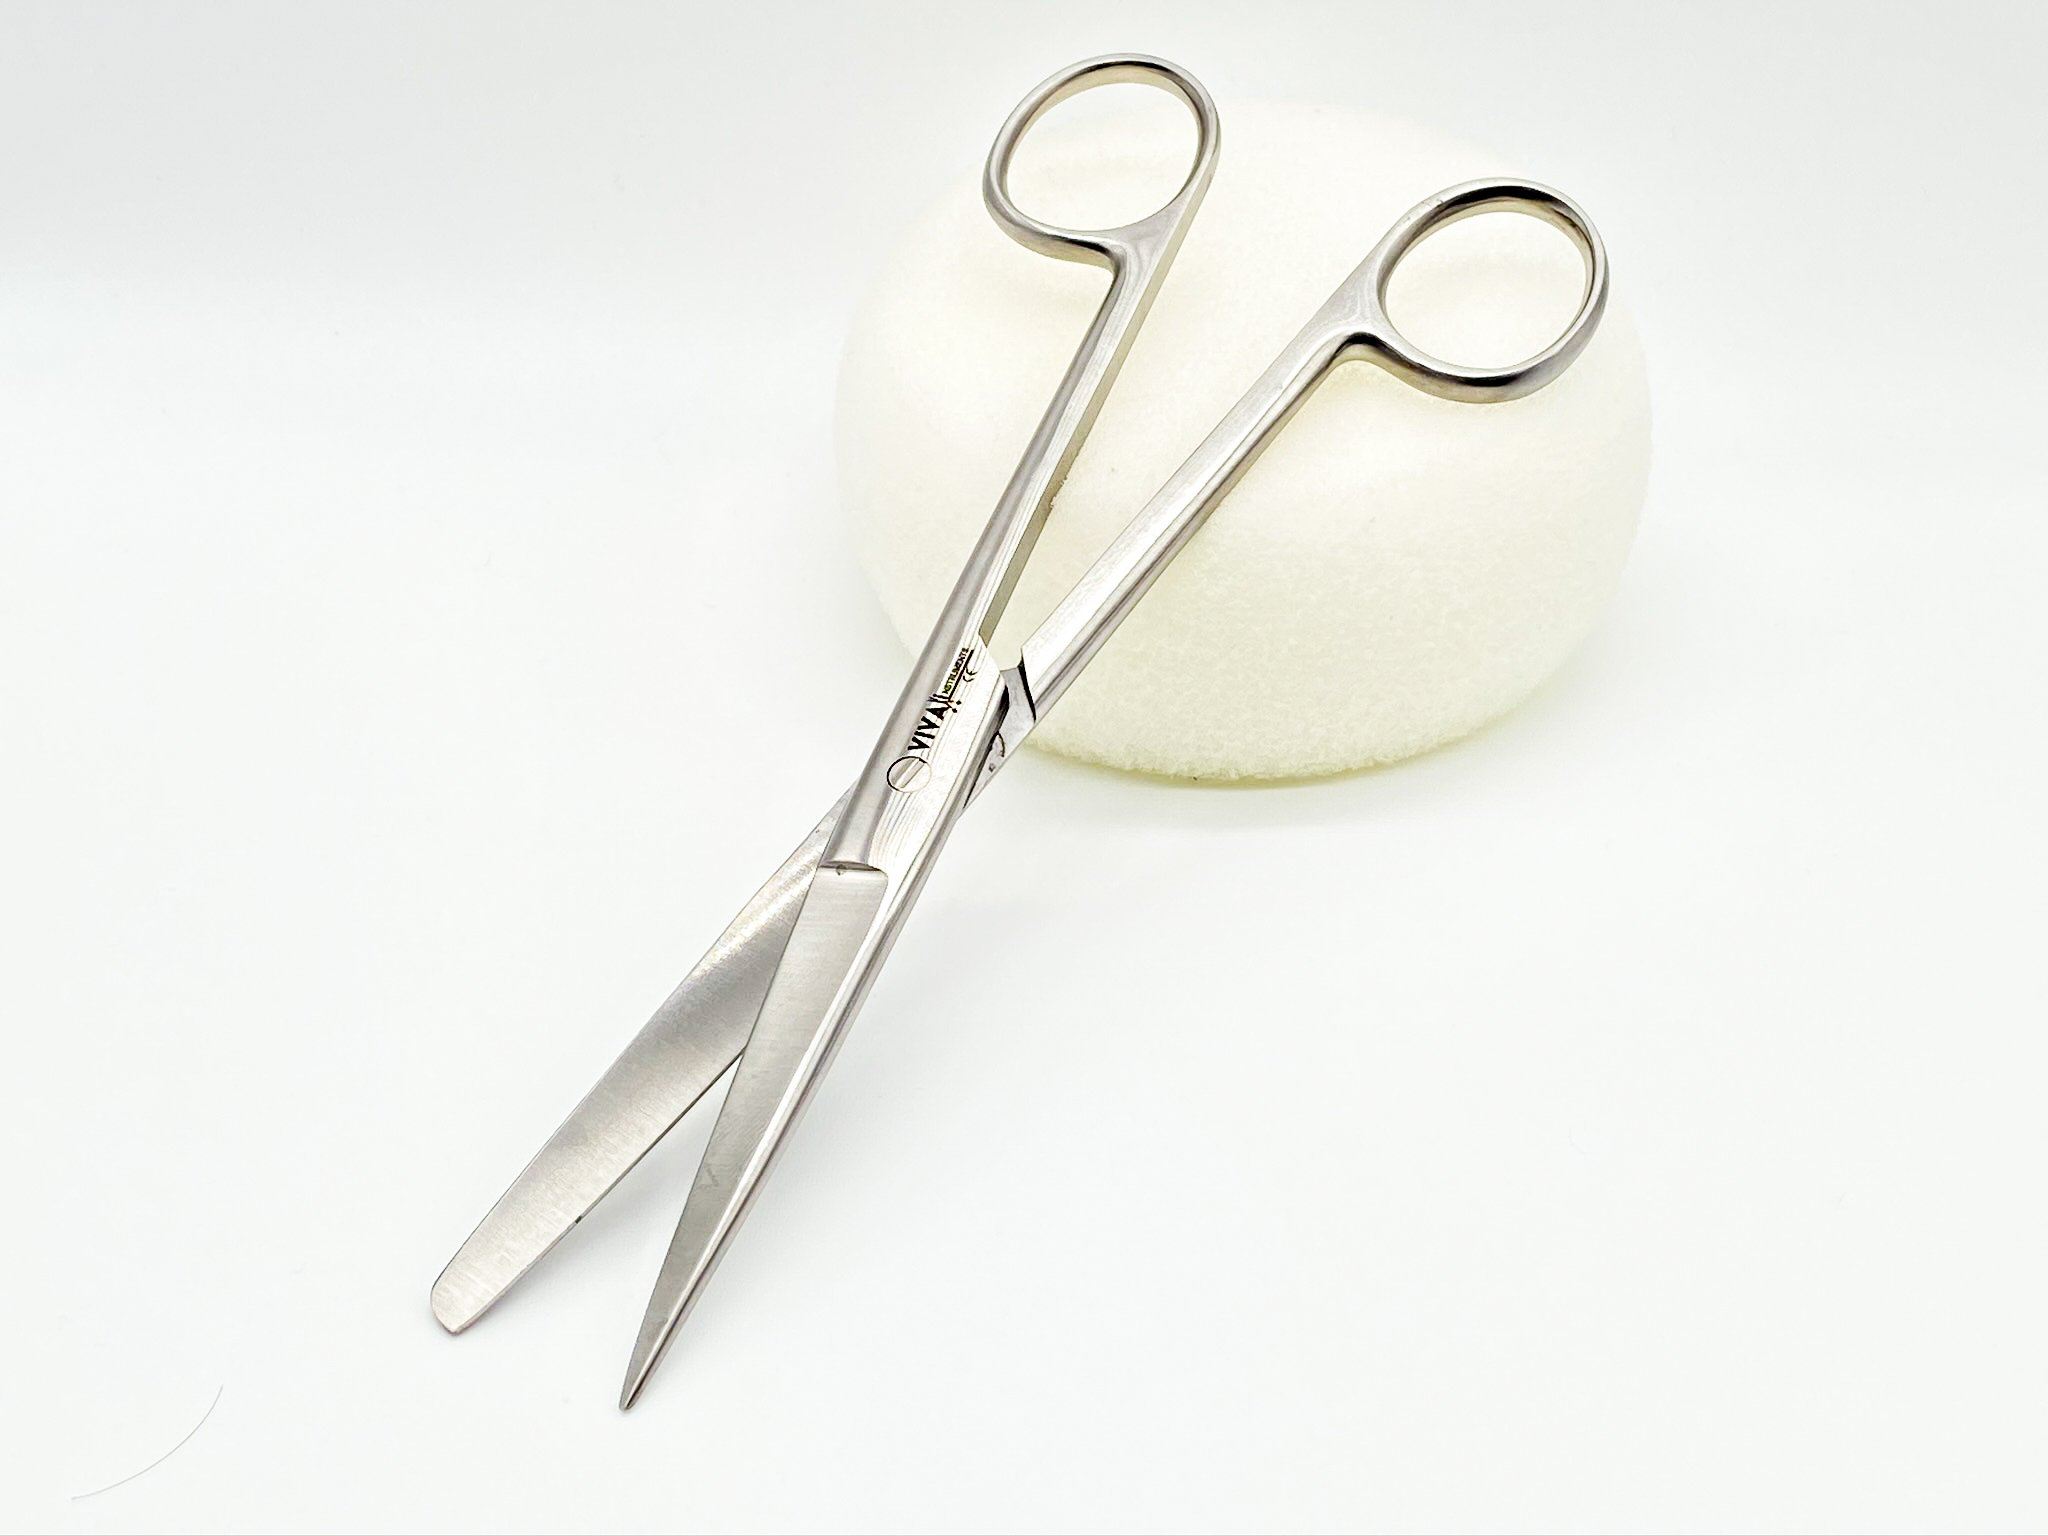 Scissor - Dressing Felt Scissor 18cm Blunt Sharp - Surgical Podiatry Instruments